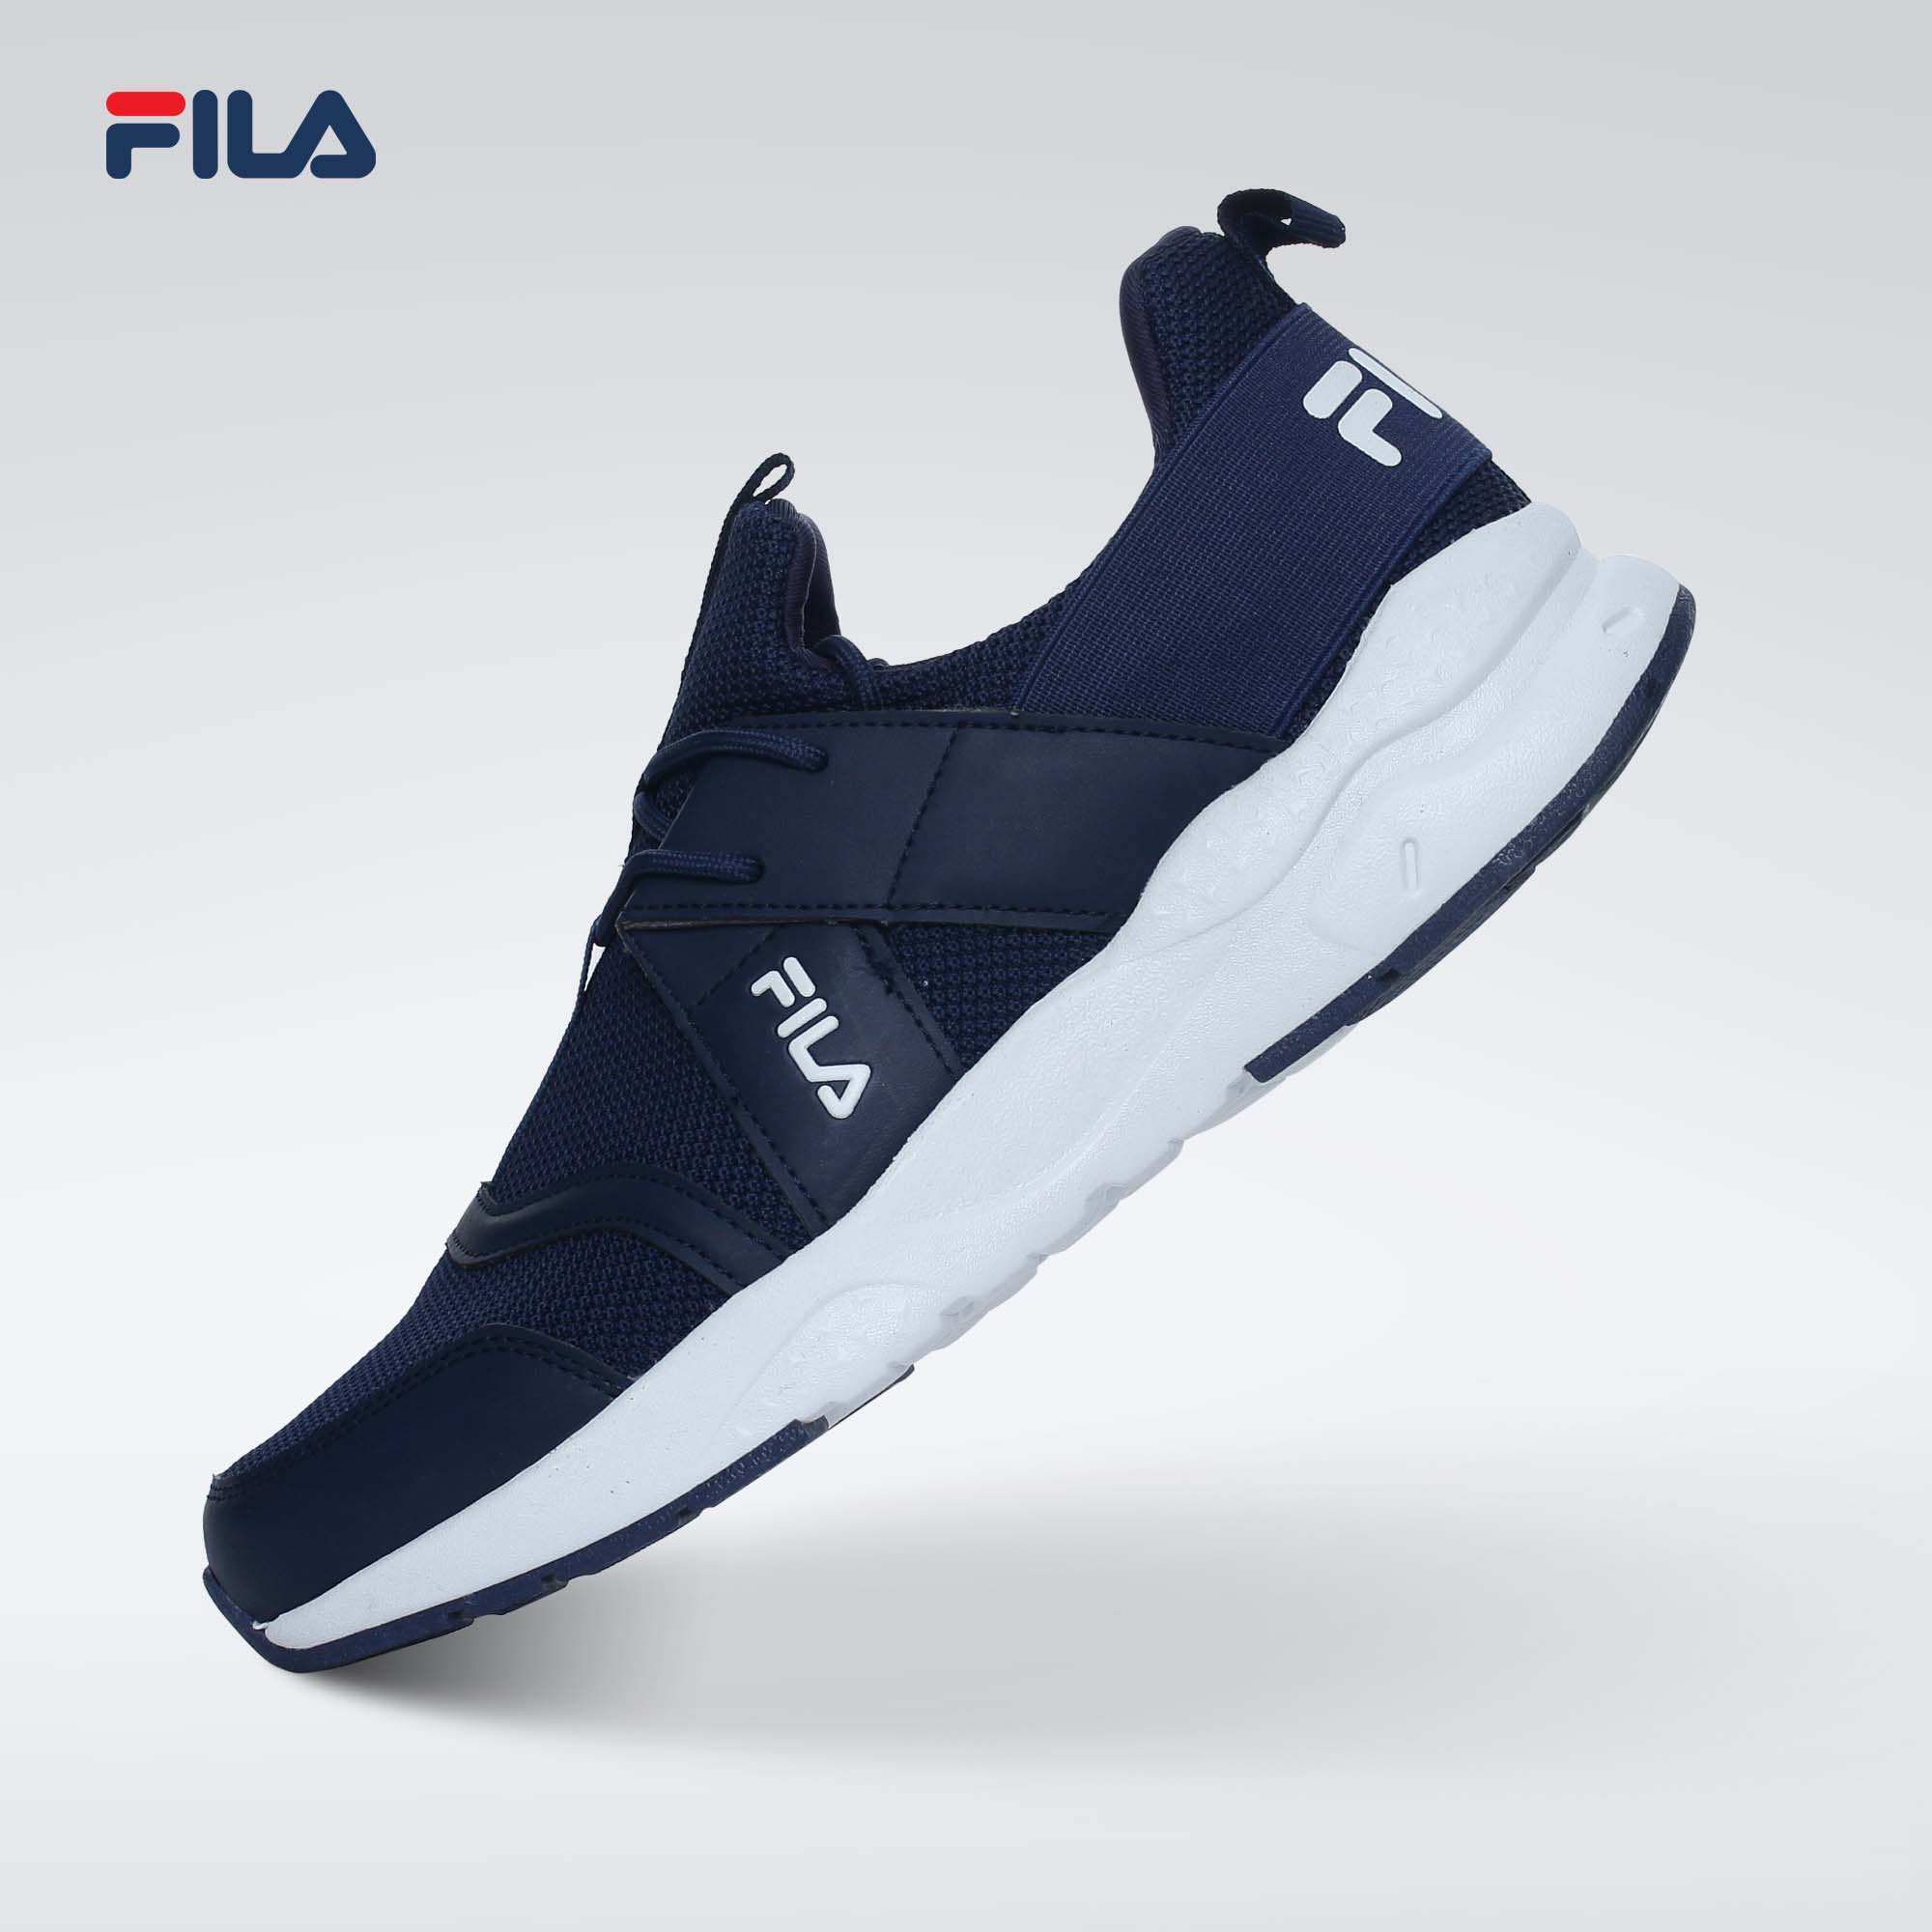 fila running shoes blue